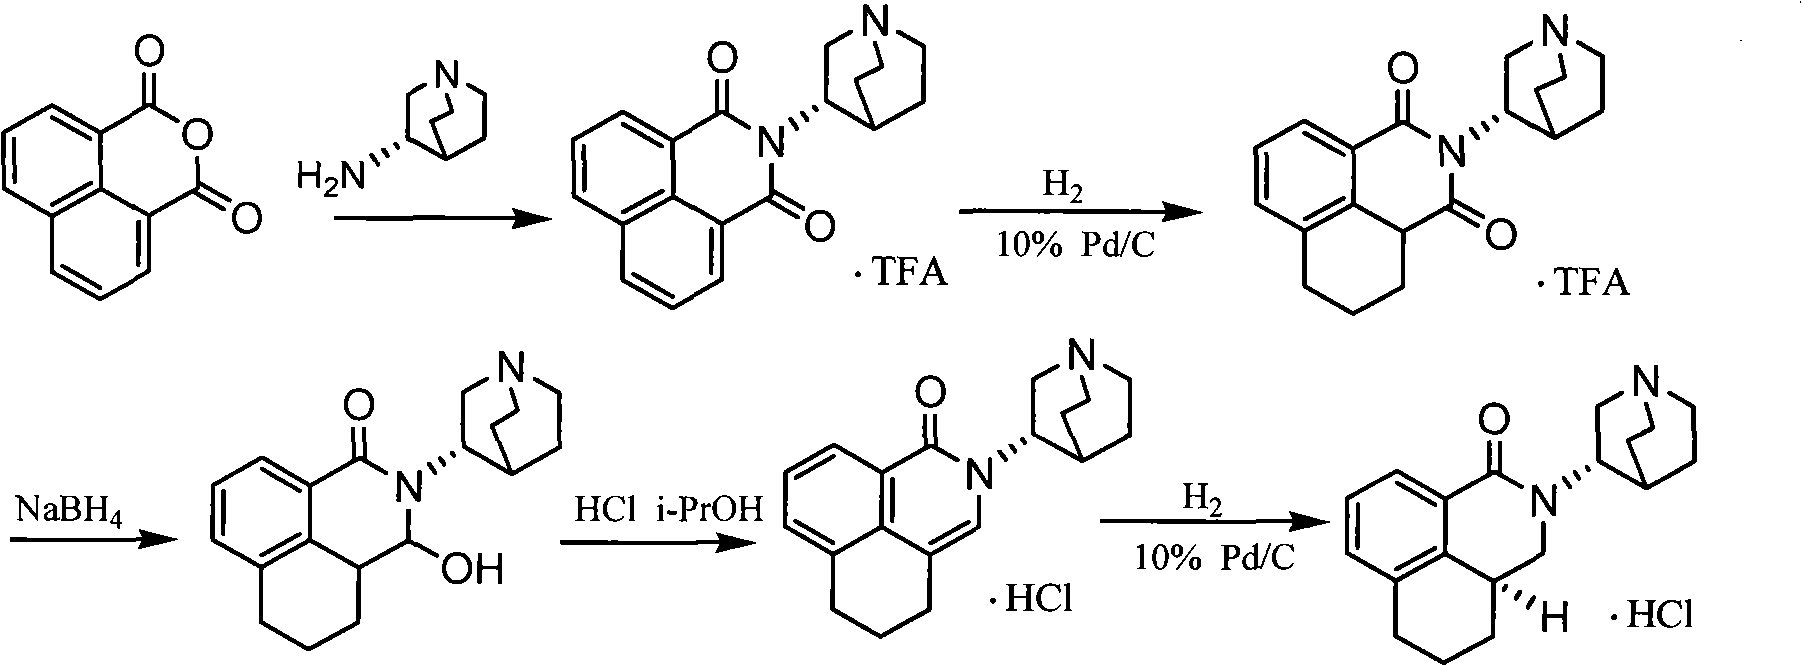 Palonosetron hydrochloride, and precursor compound and preparation method thereof